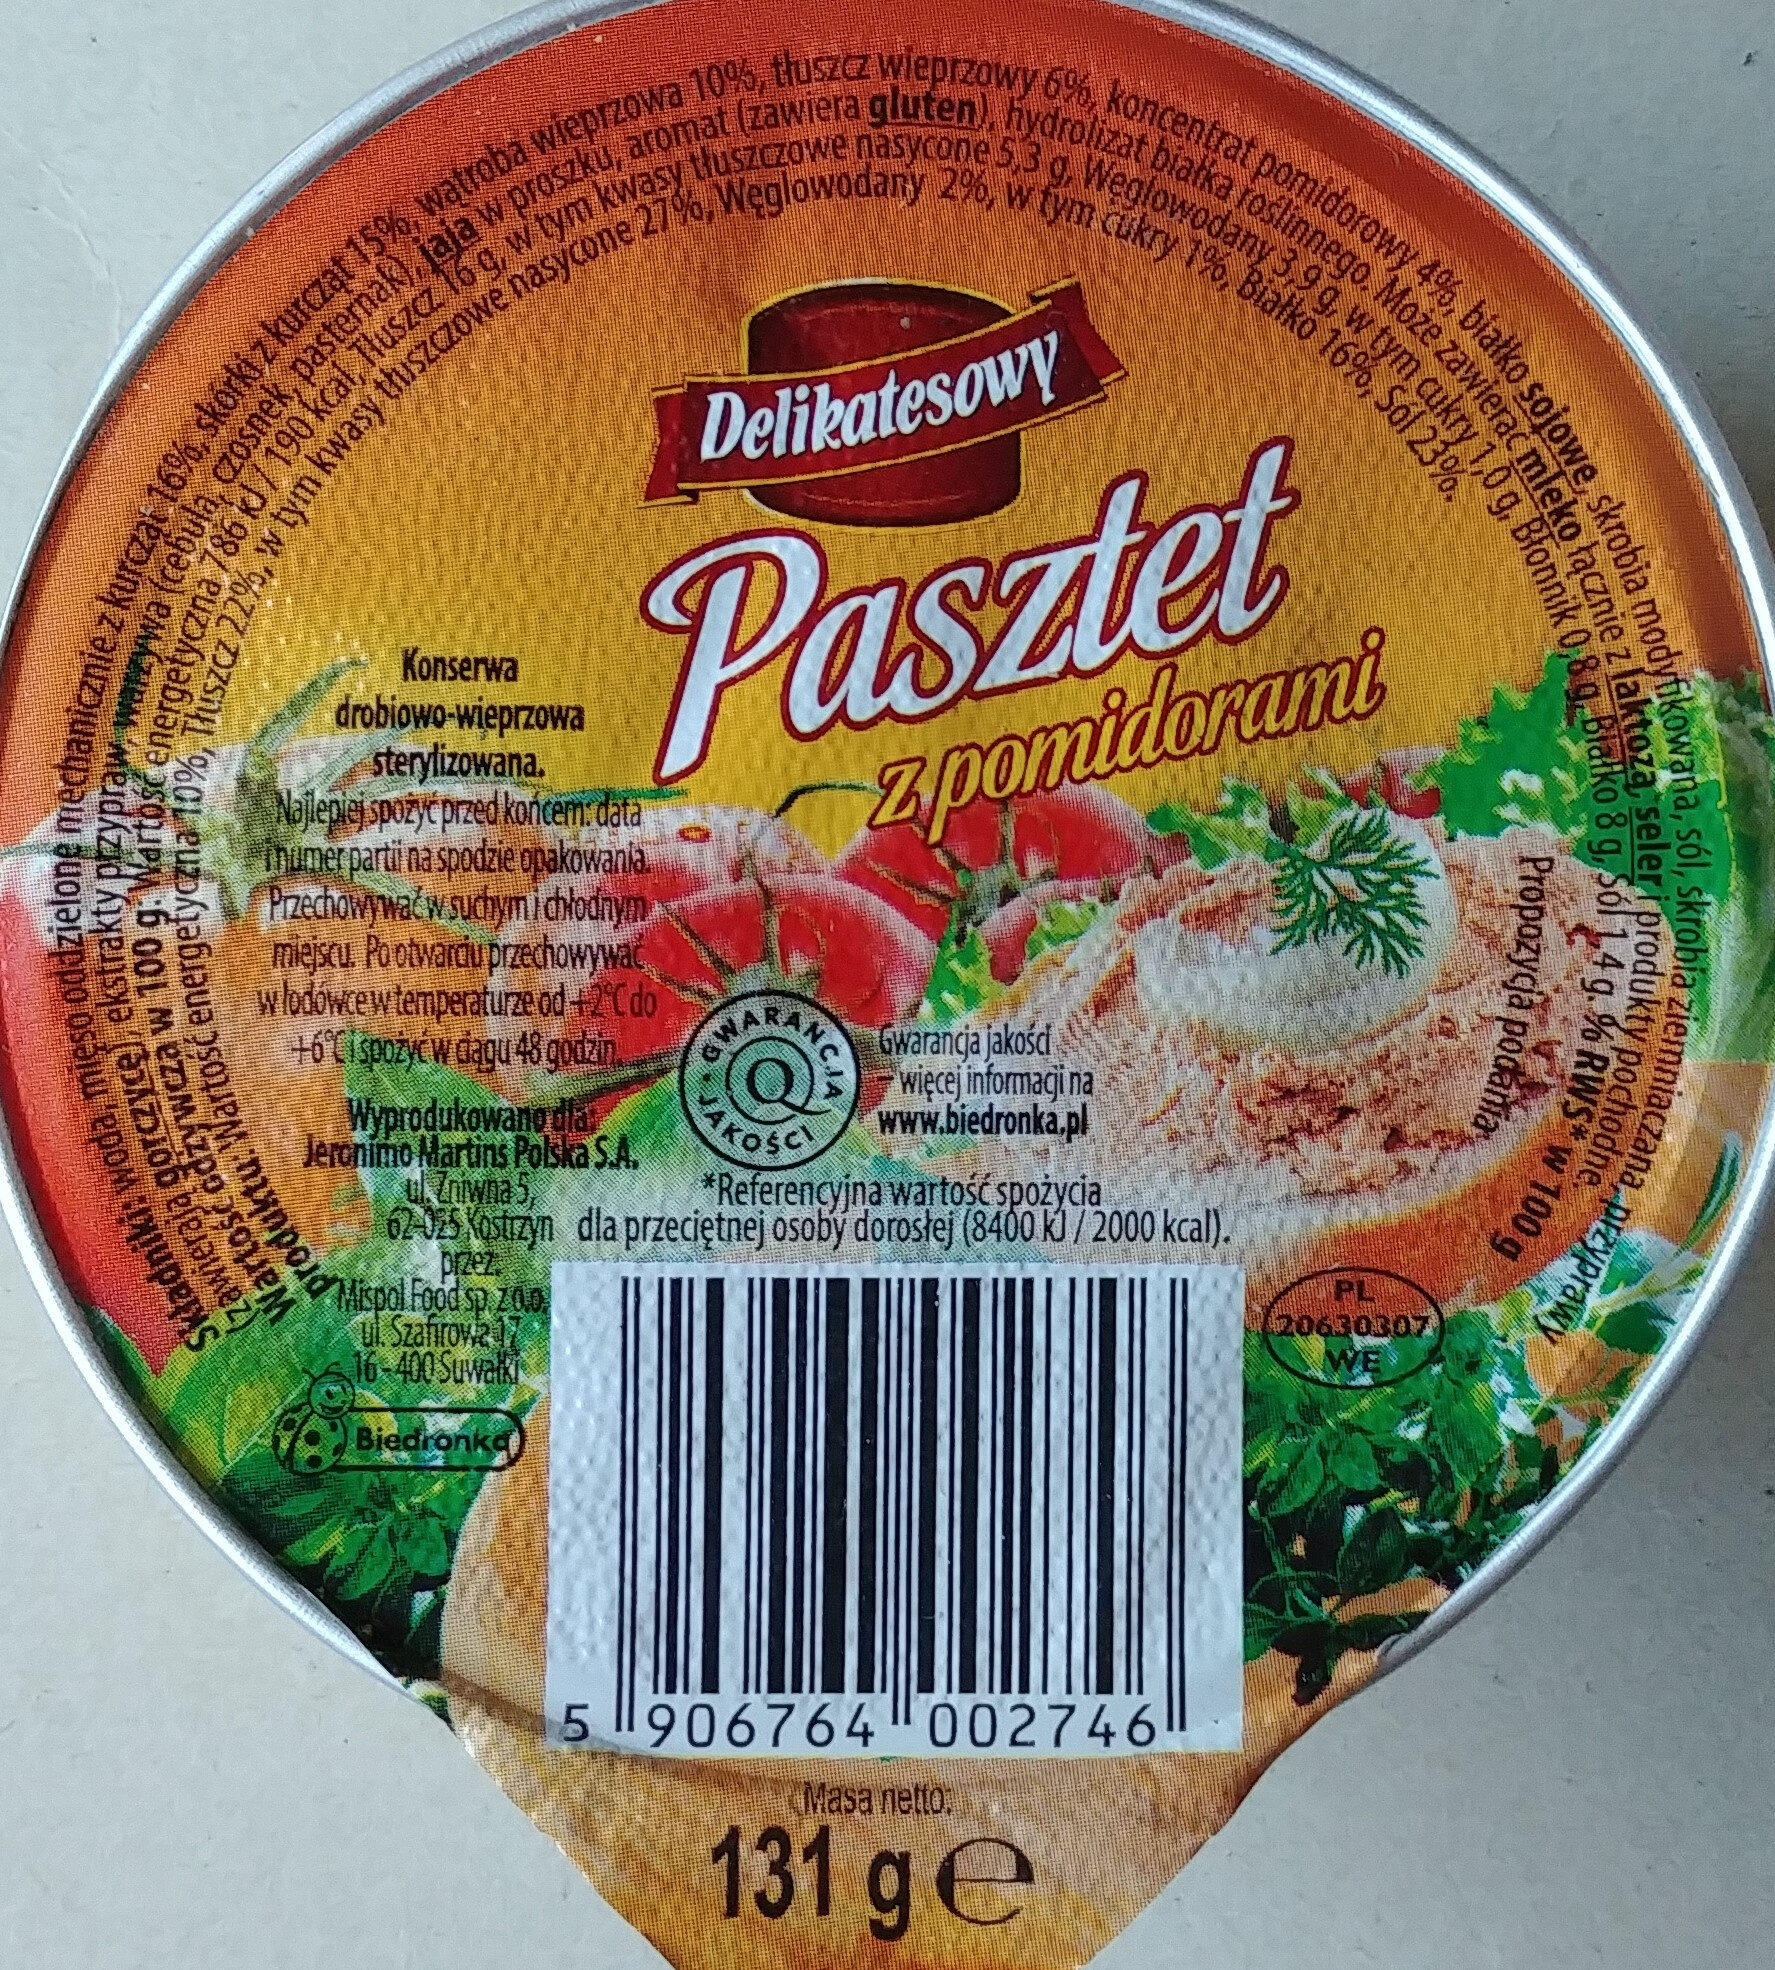 Pasztet z pomidorami - Product - pl